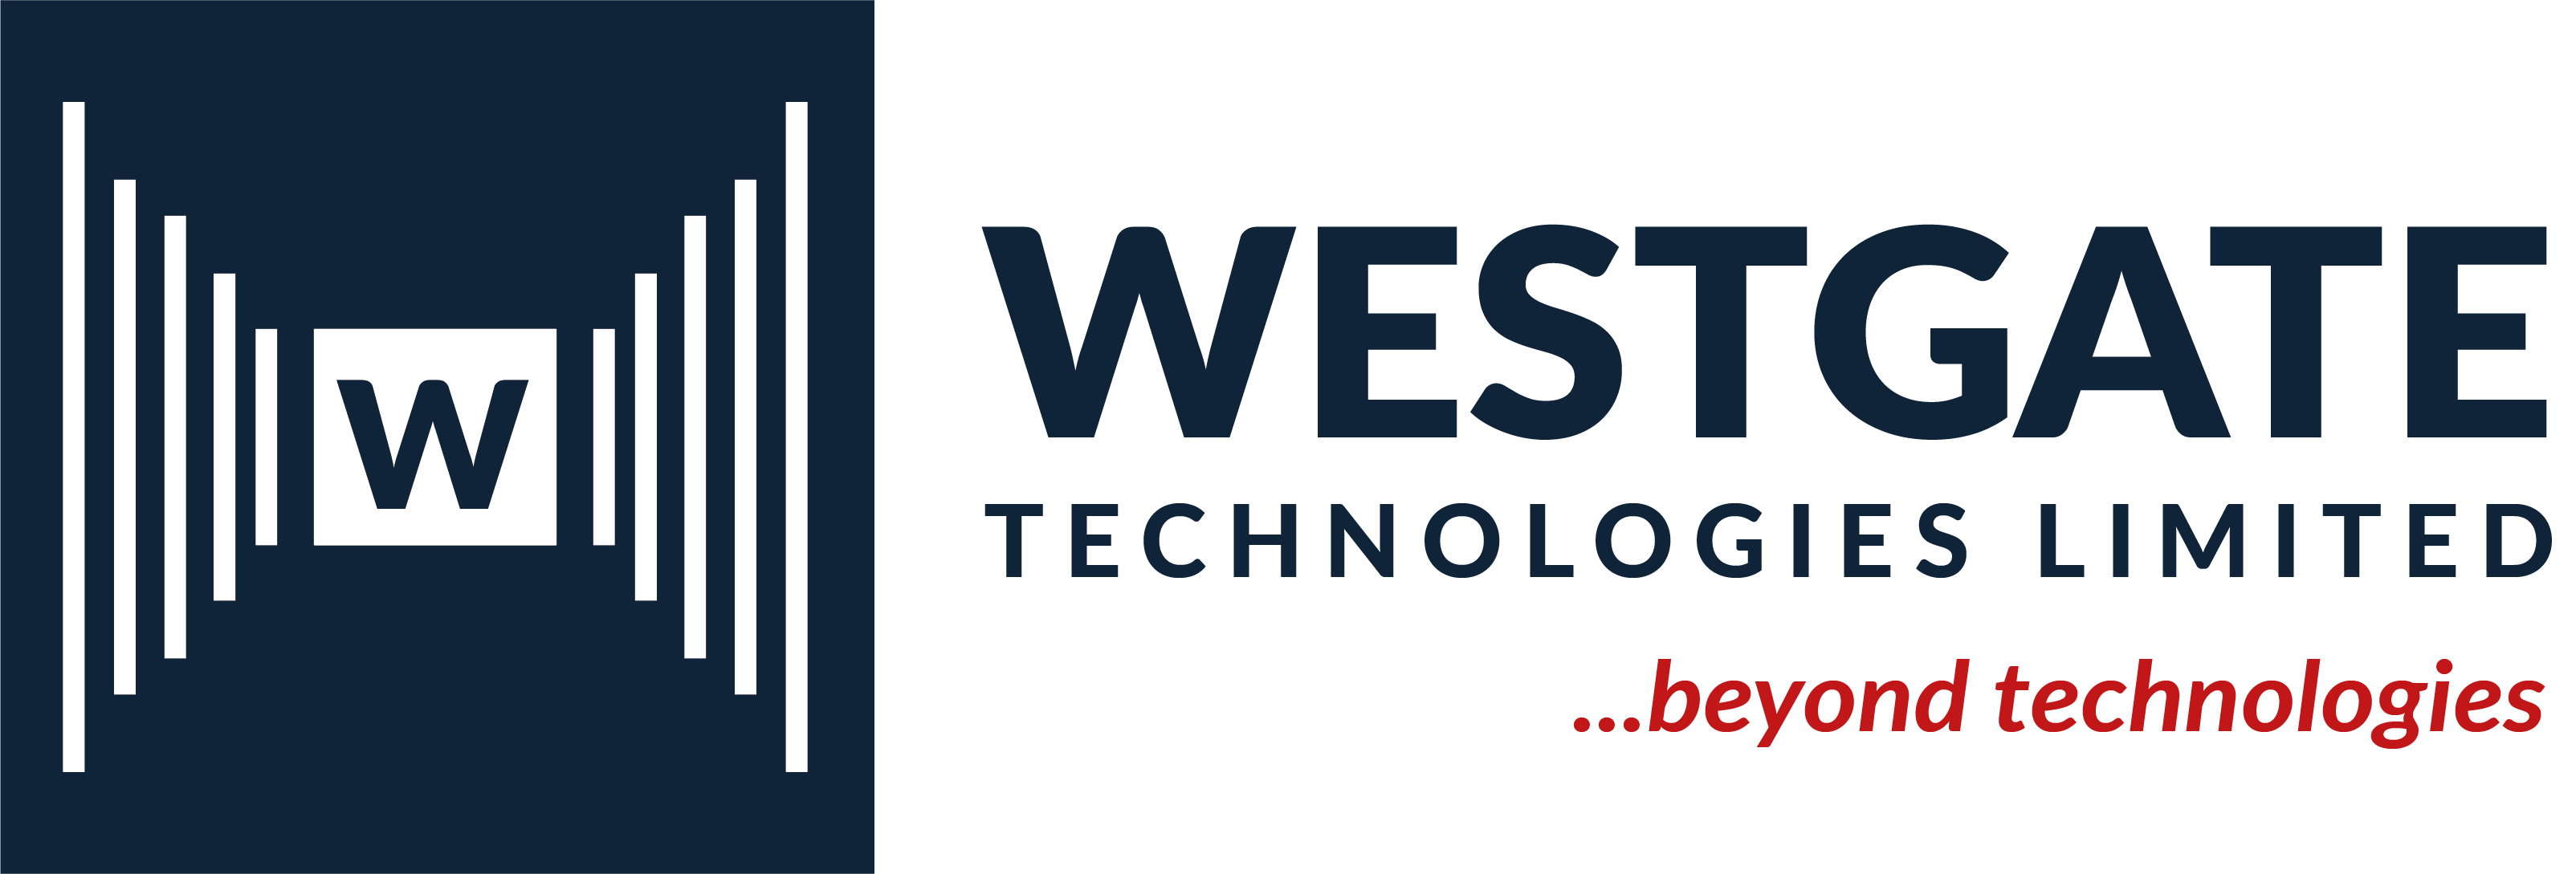 Westgate Technologies